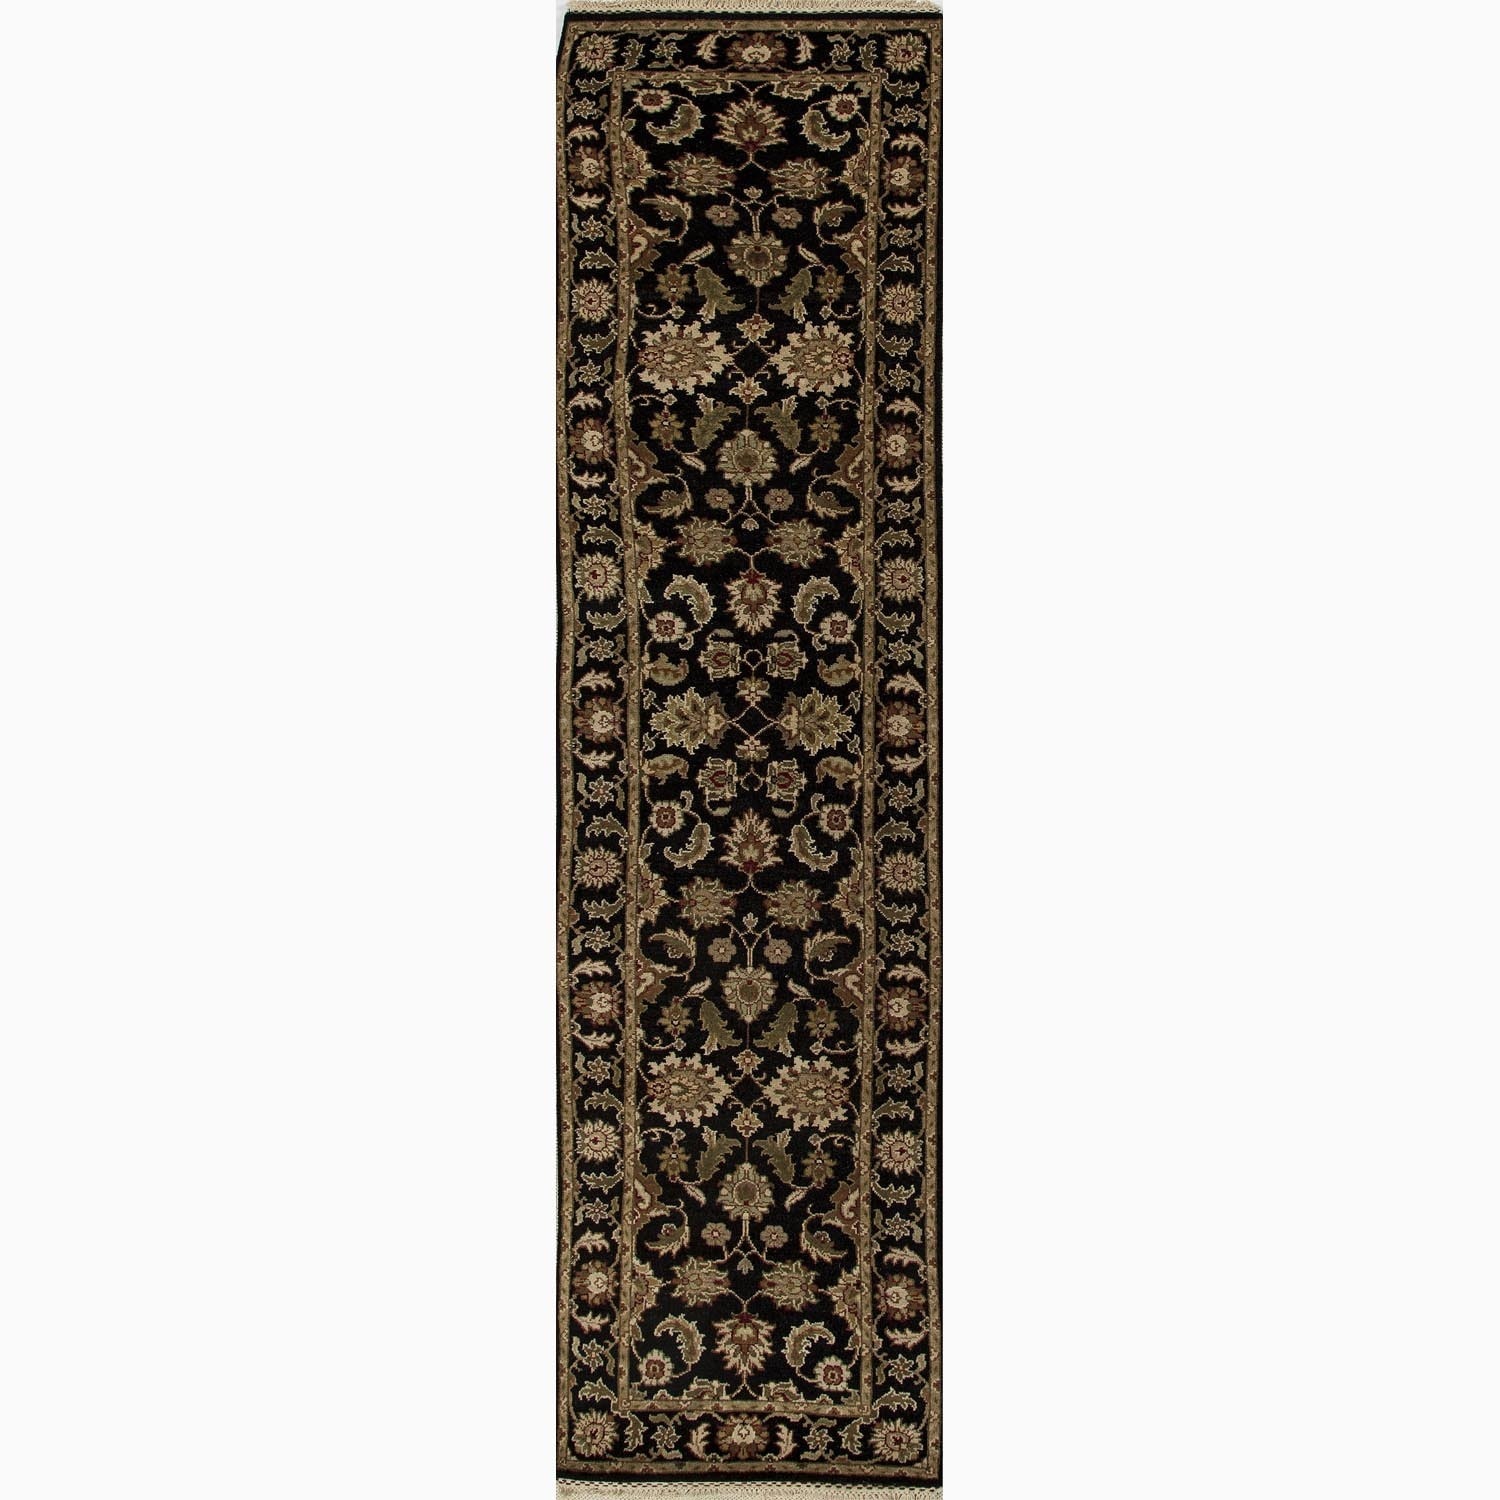 Hand made Oriental Pattern Black/ Tan Wool Rug (2.6x8)